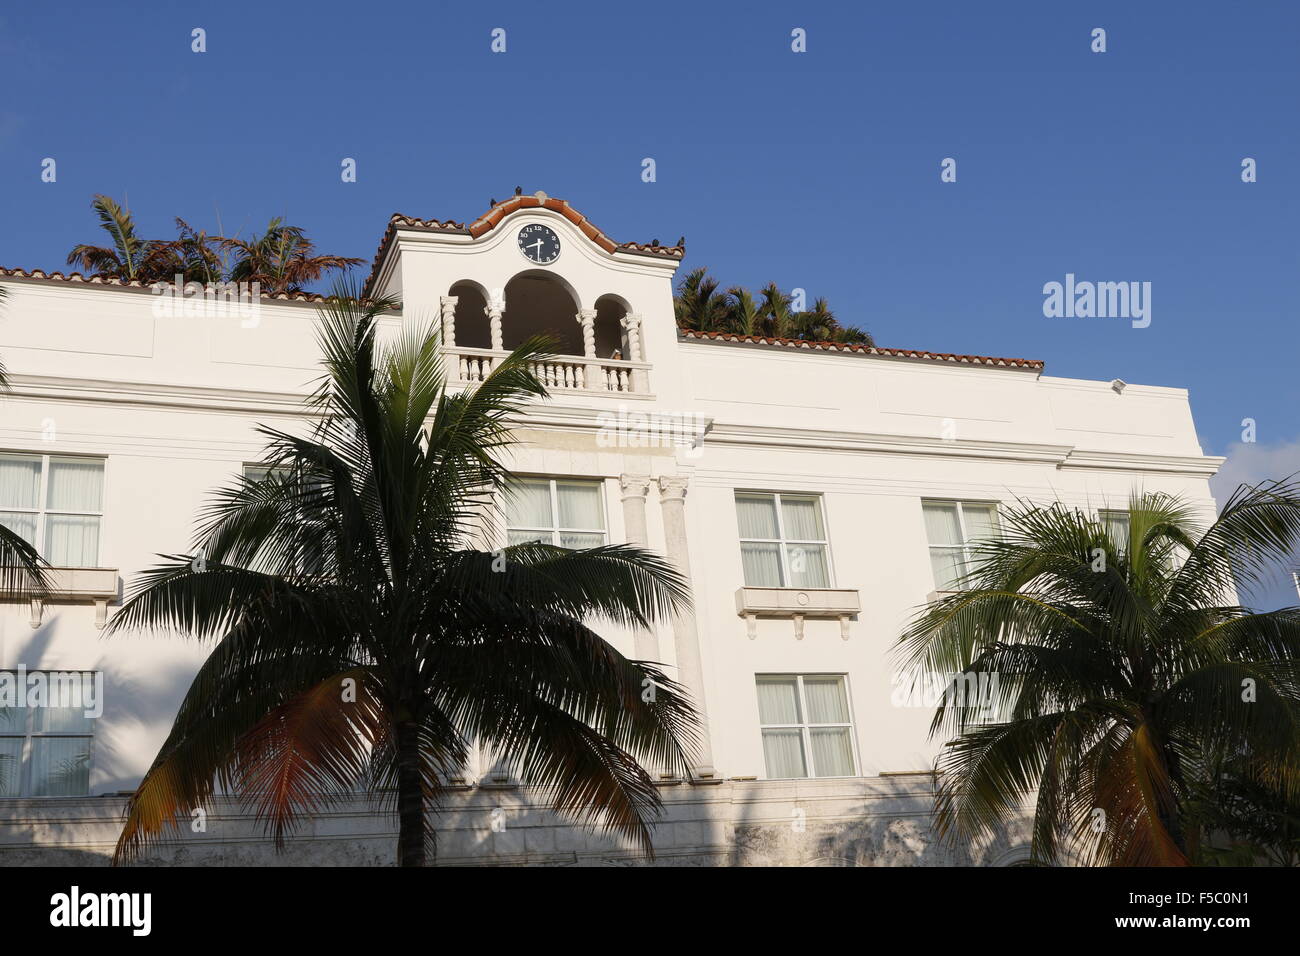 Histórico edificio Art Deco de Ocean Drive, Miami Beach, FL. Foto de stock